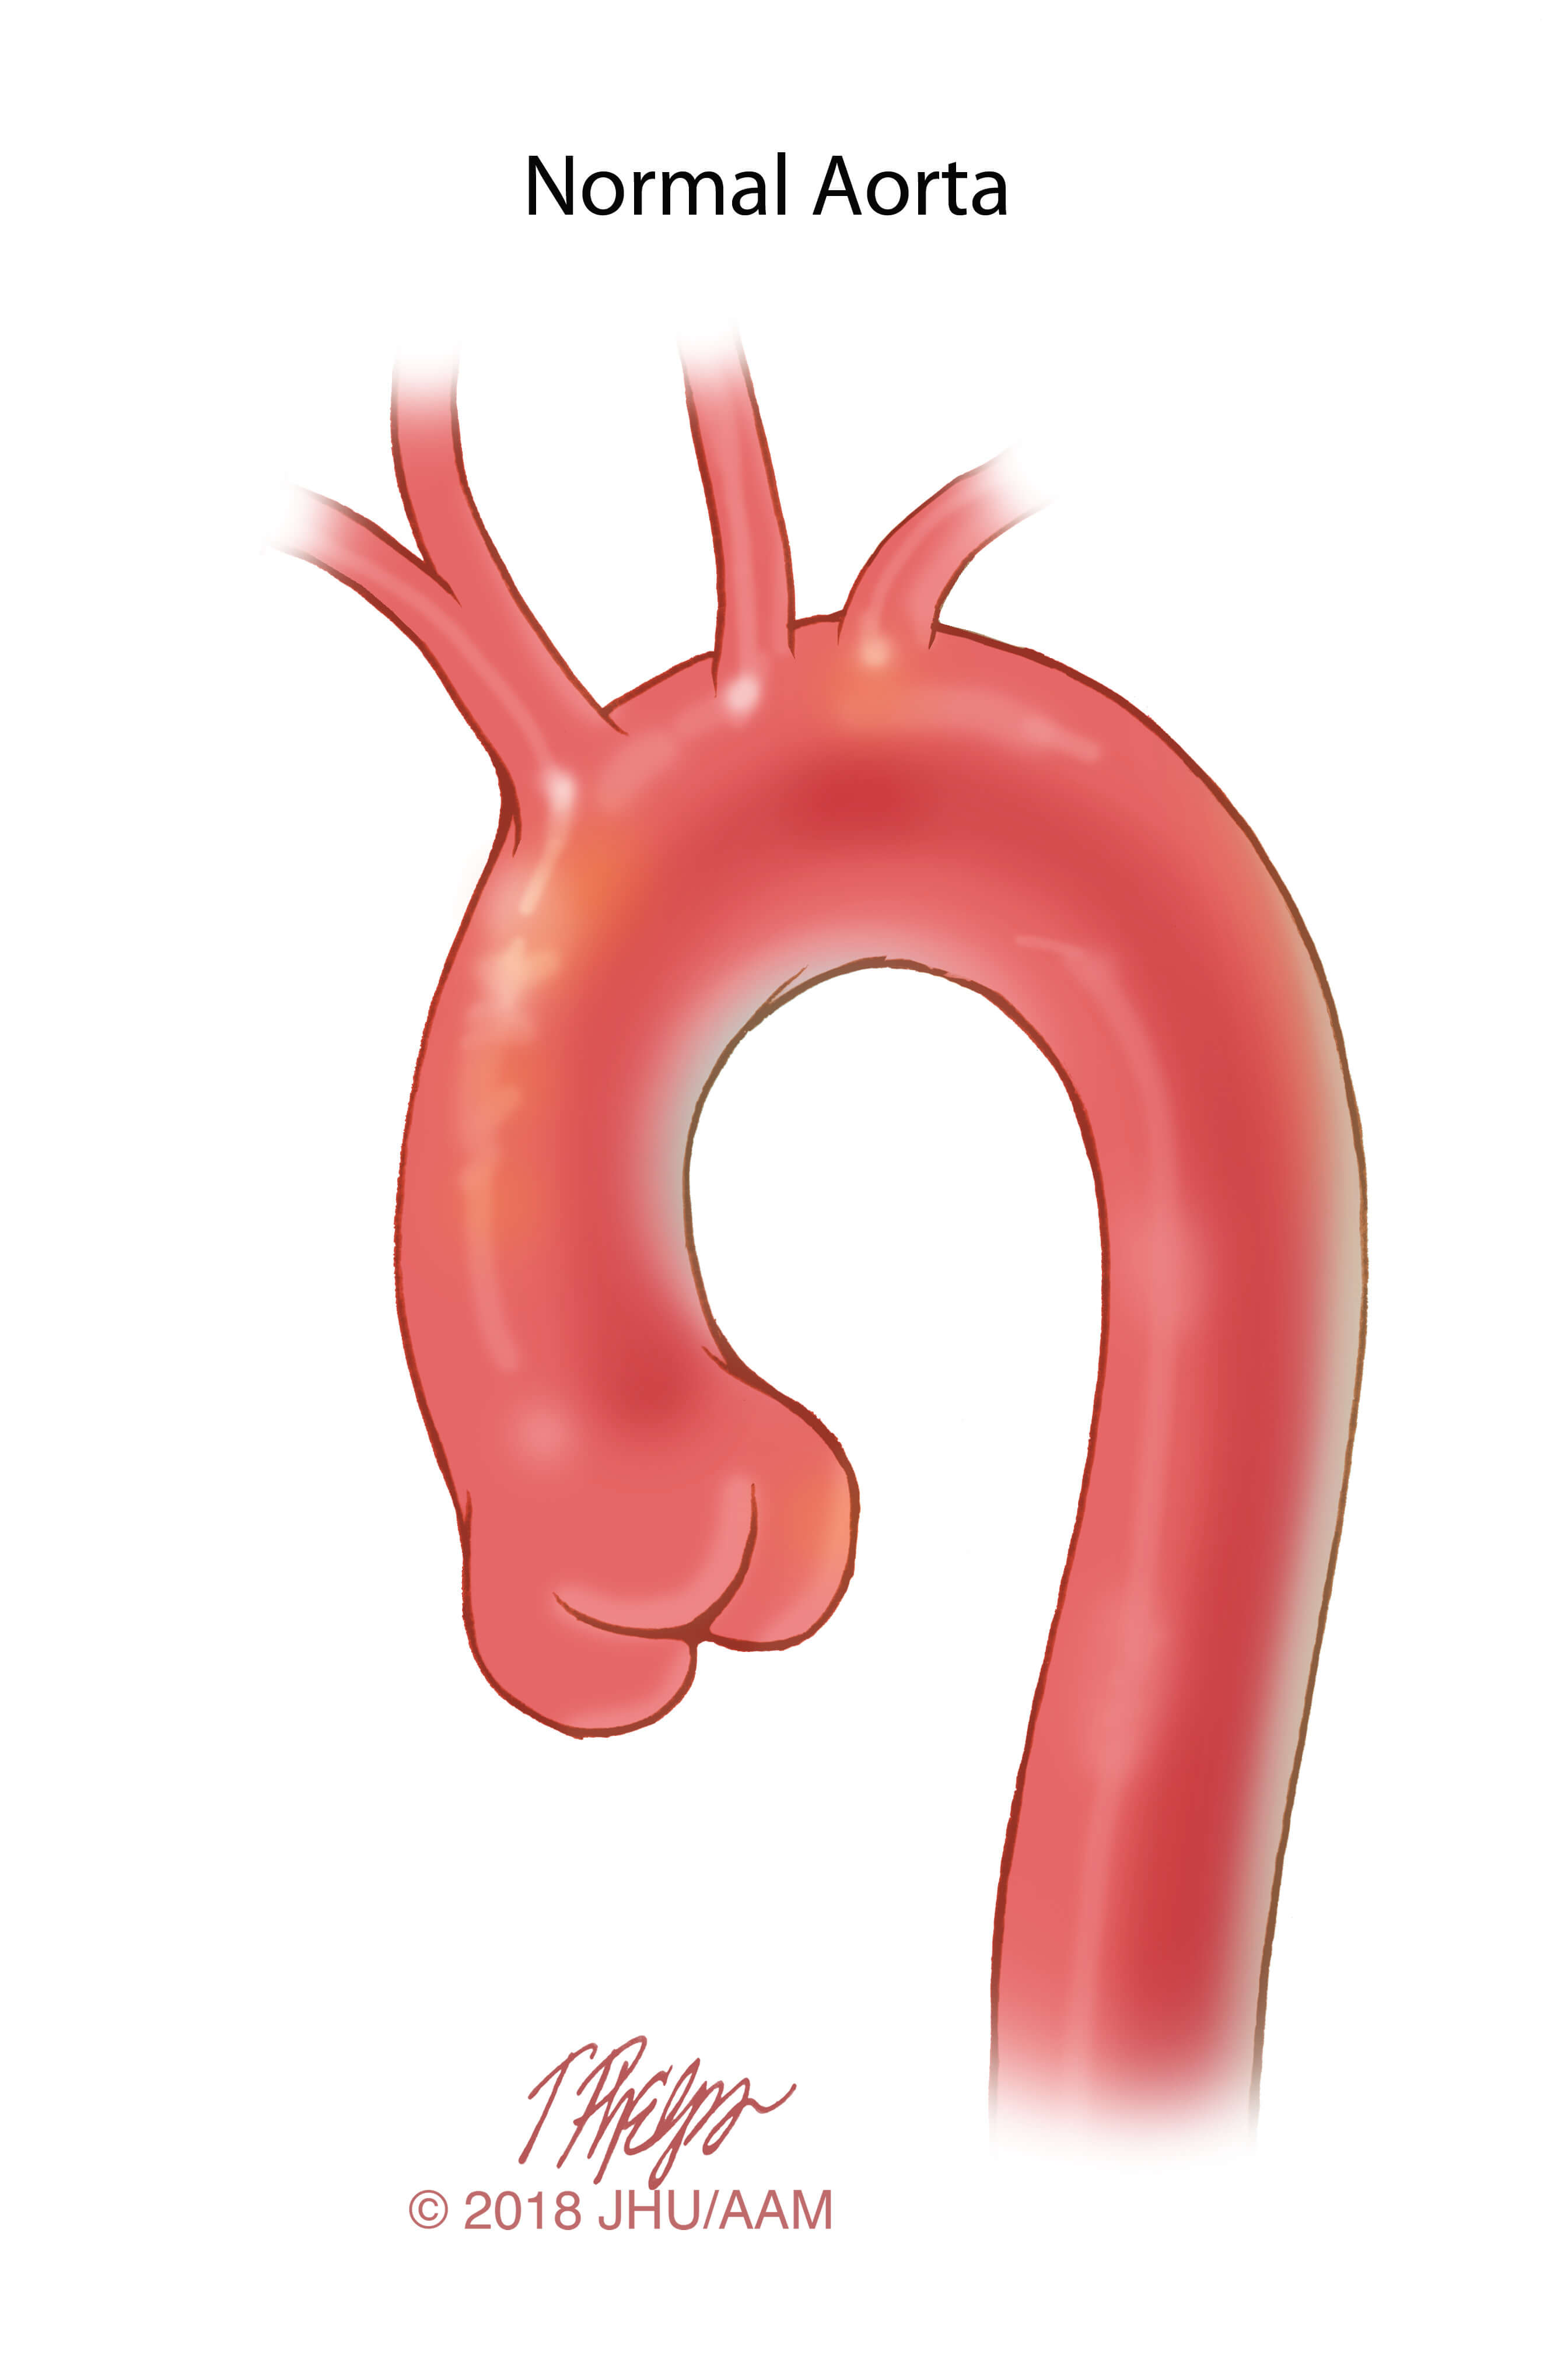 Normal Aorta